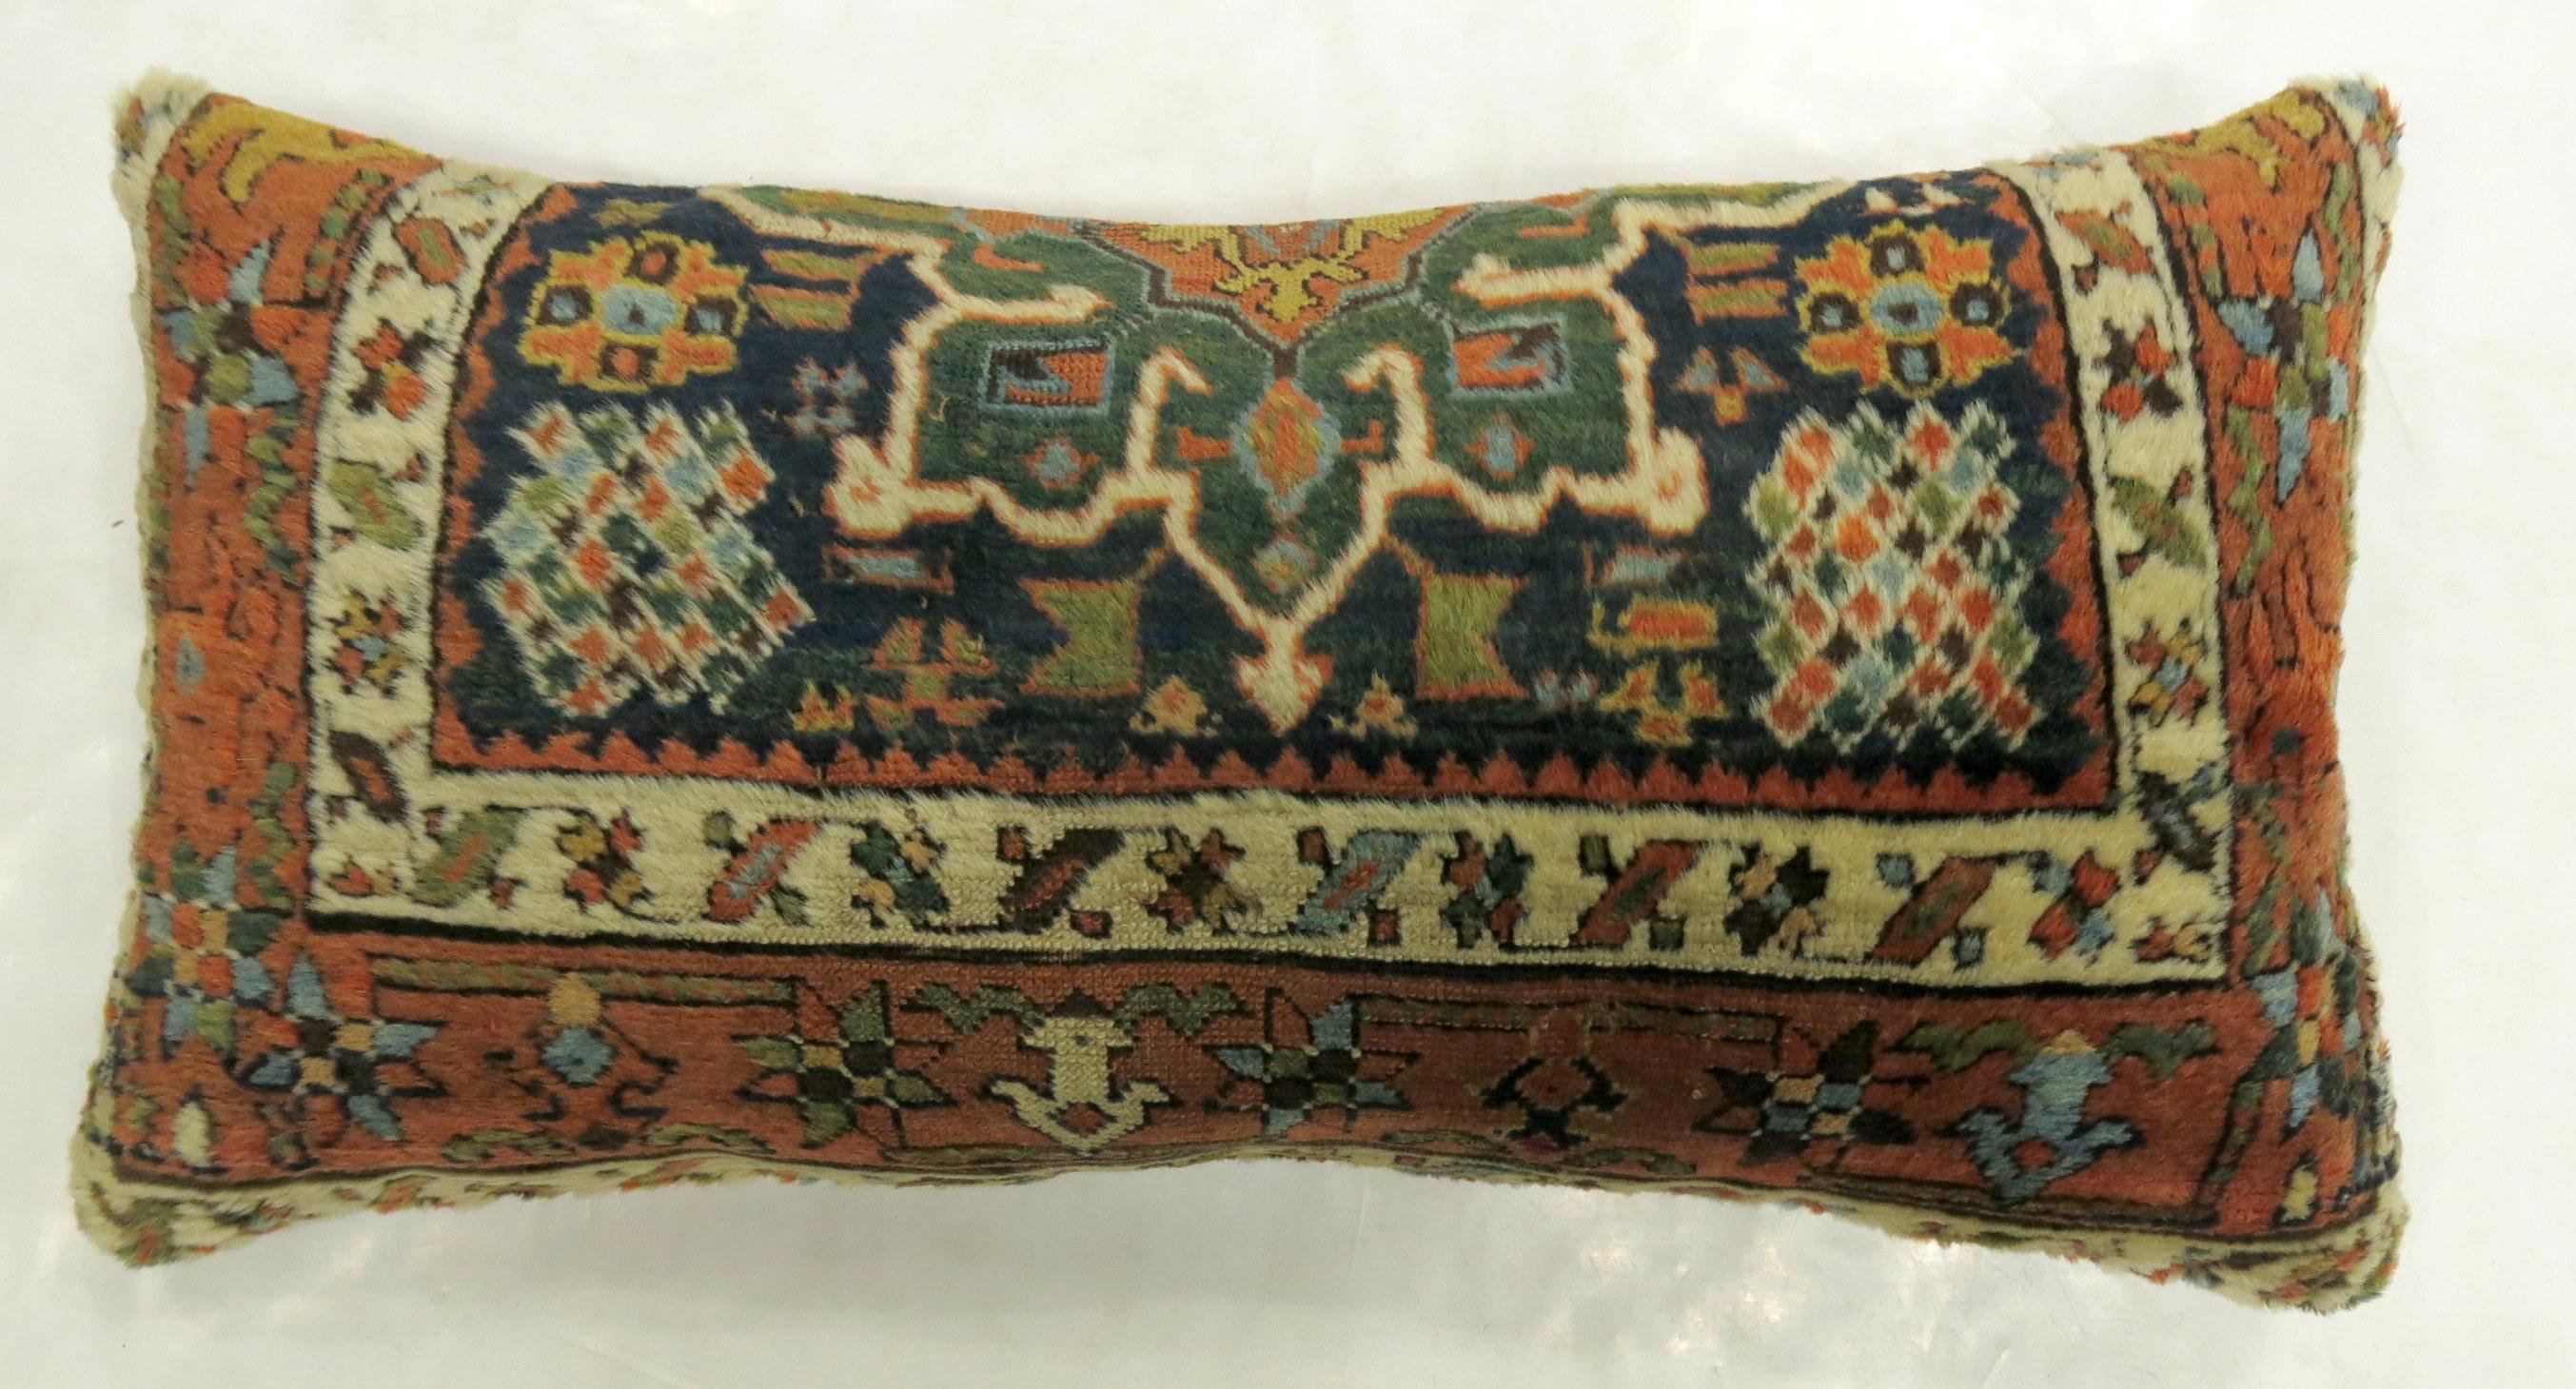 Pillow made from a vintage Persian Karadja Heriz rug.

Measures: 16